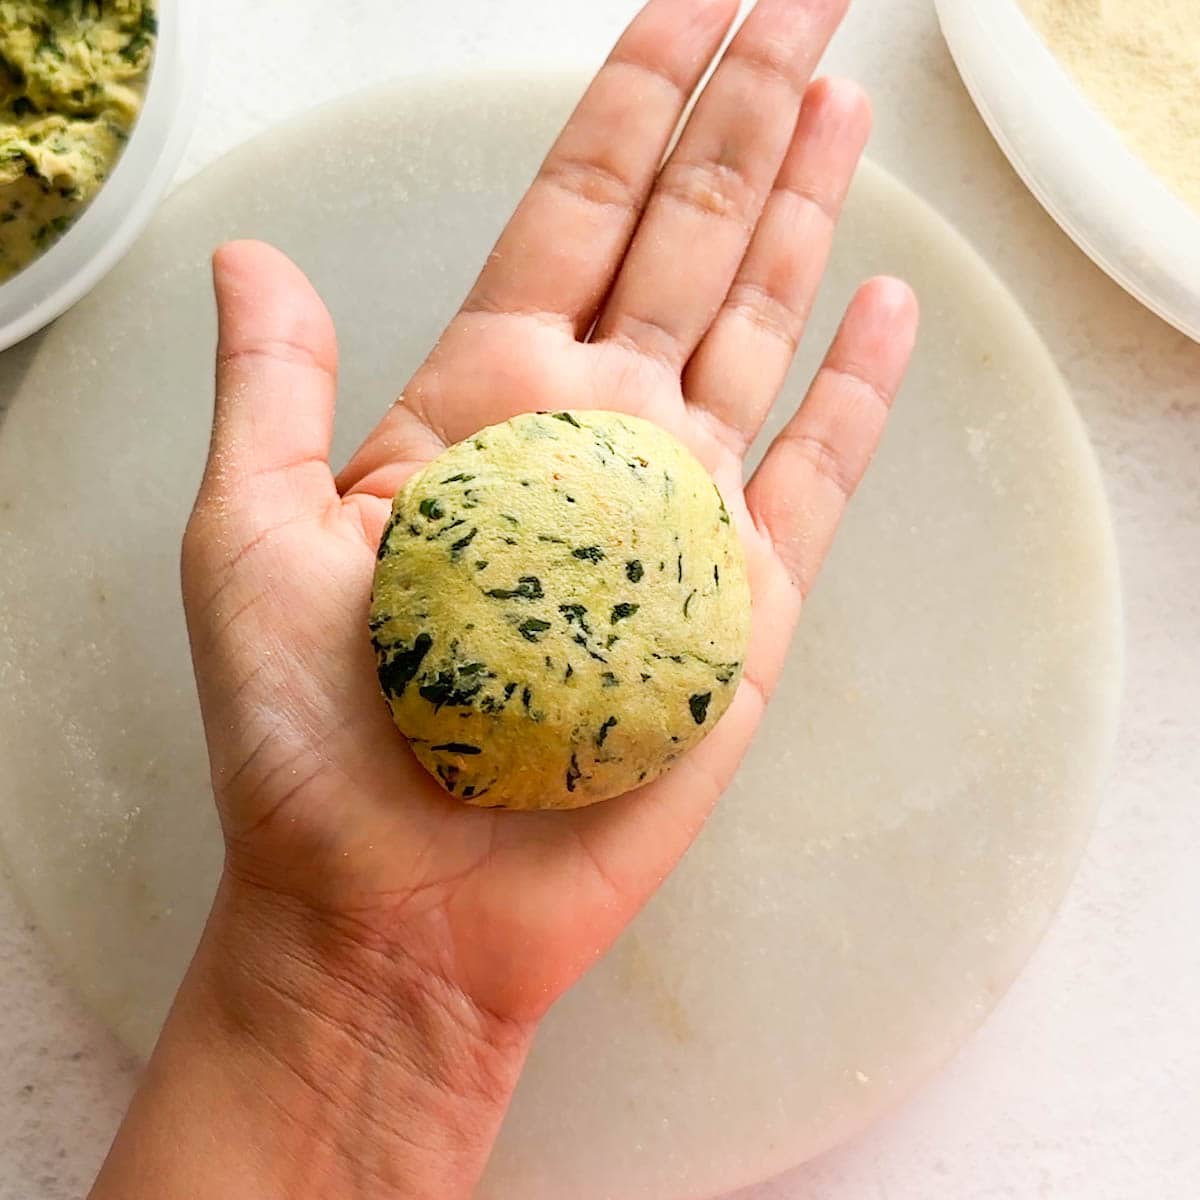 make ball of the dough